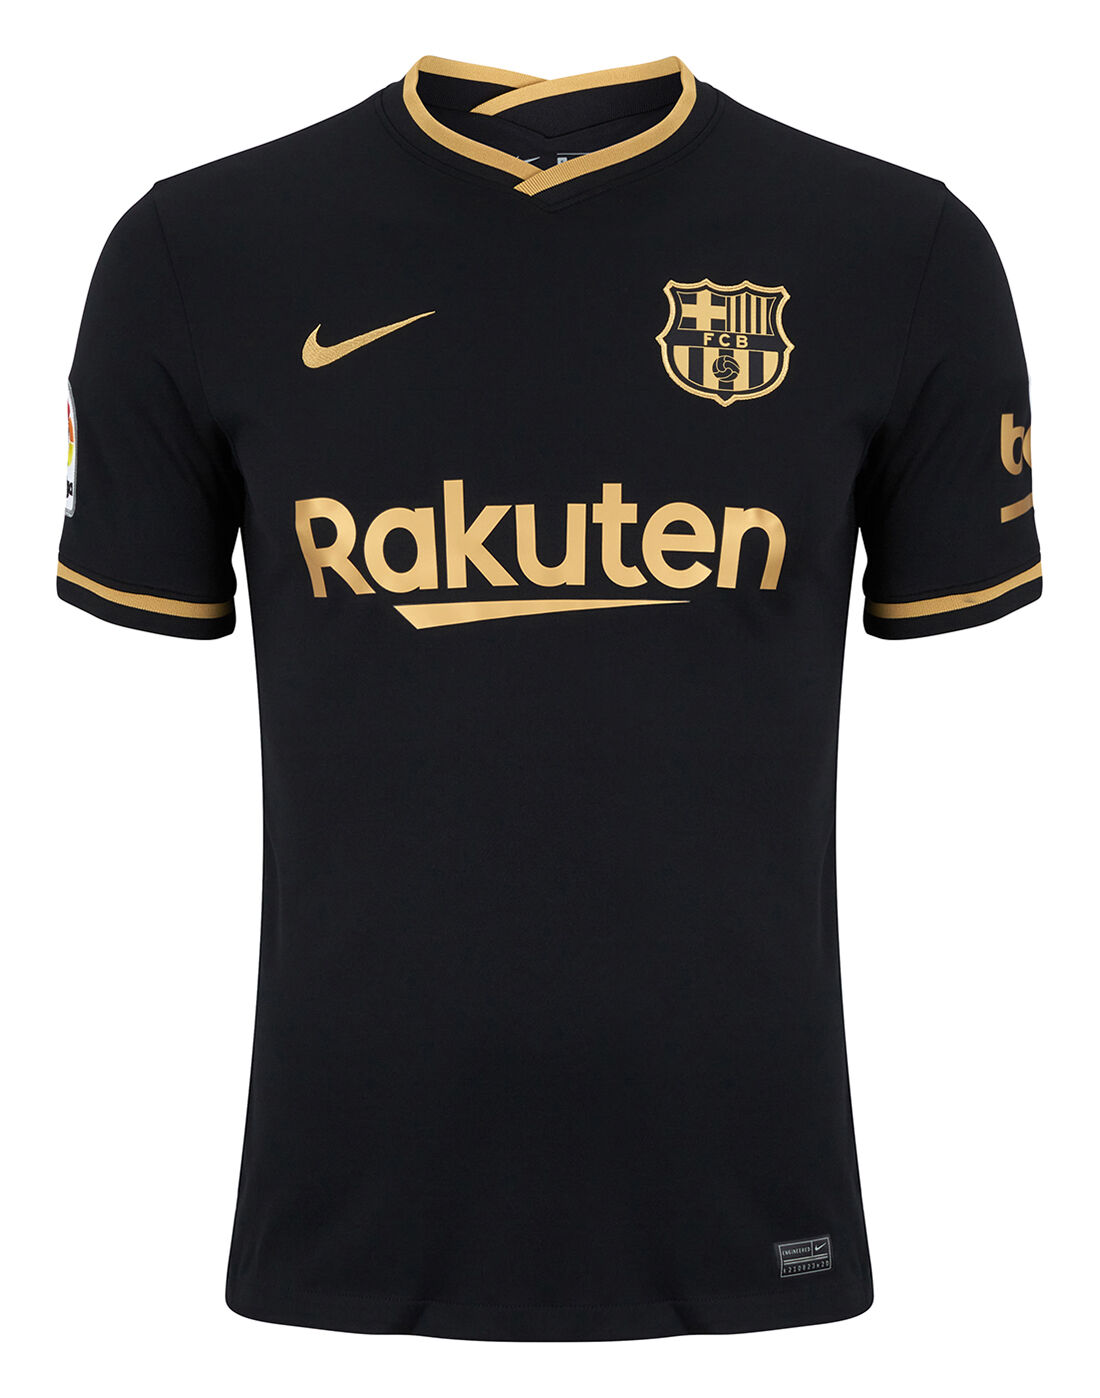 barcelona black jersey